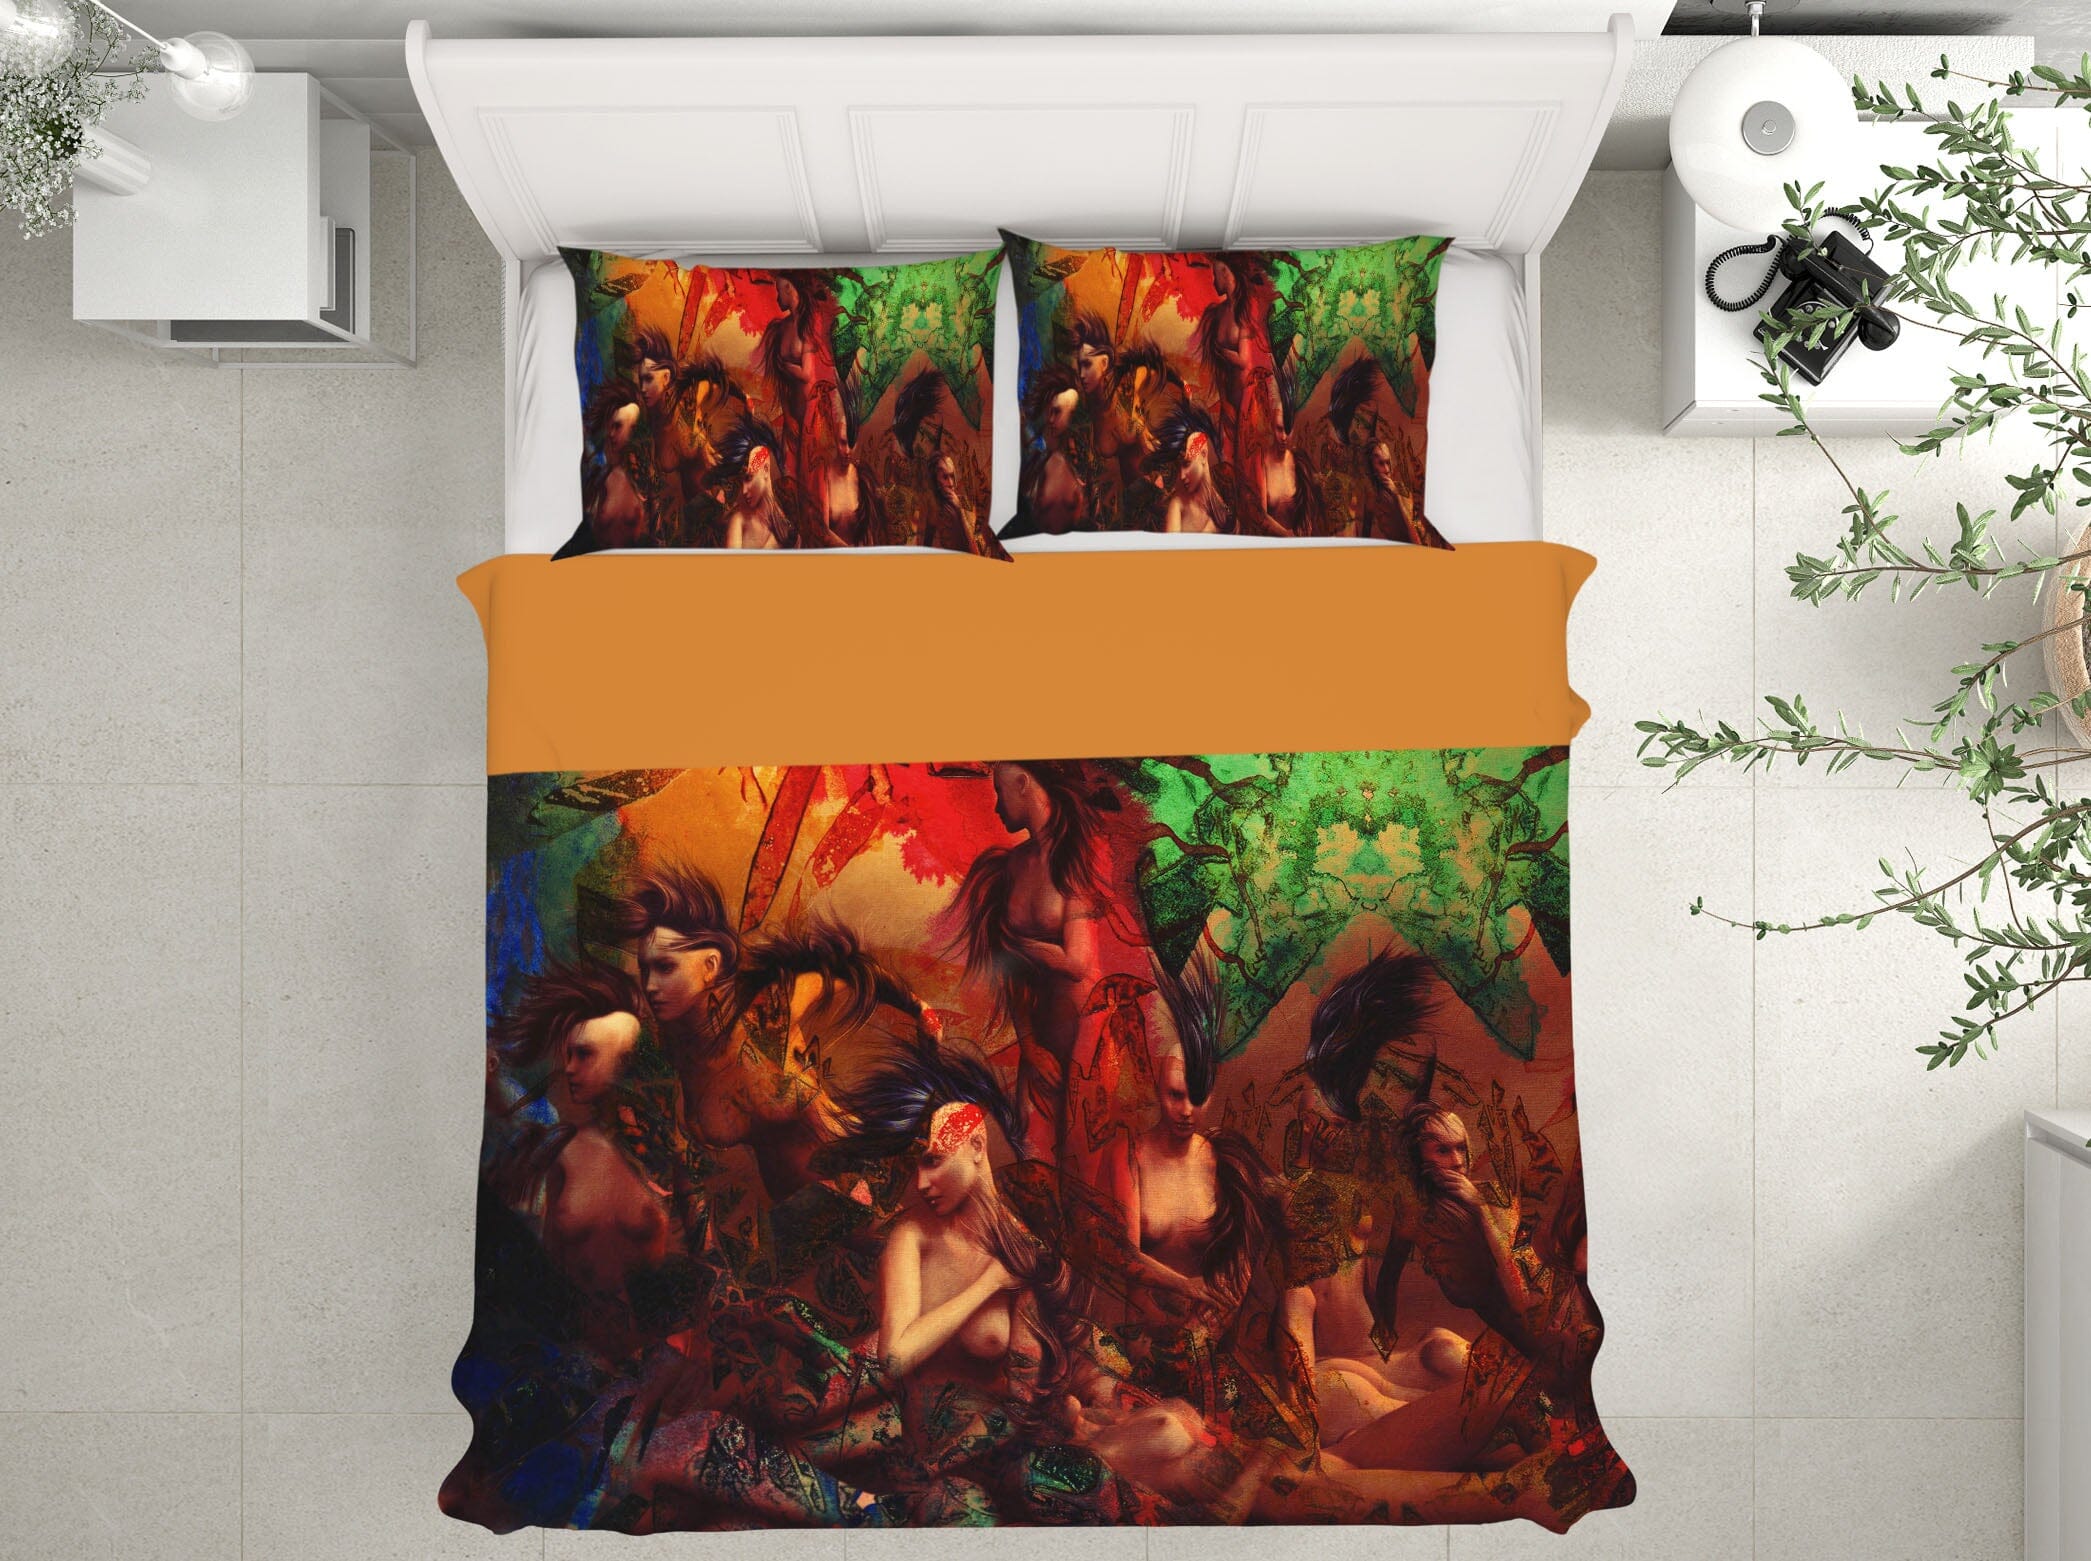 3D Life In Technicolor 2002 Marco Cavazzana Bedding Bed Pillowcases Quilt Quiet Covers AJ Creativity Home 